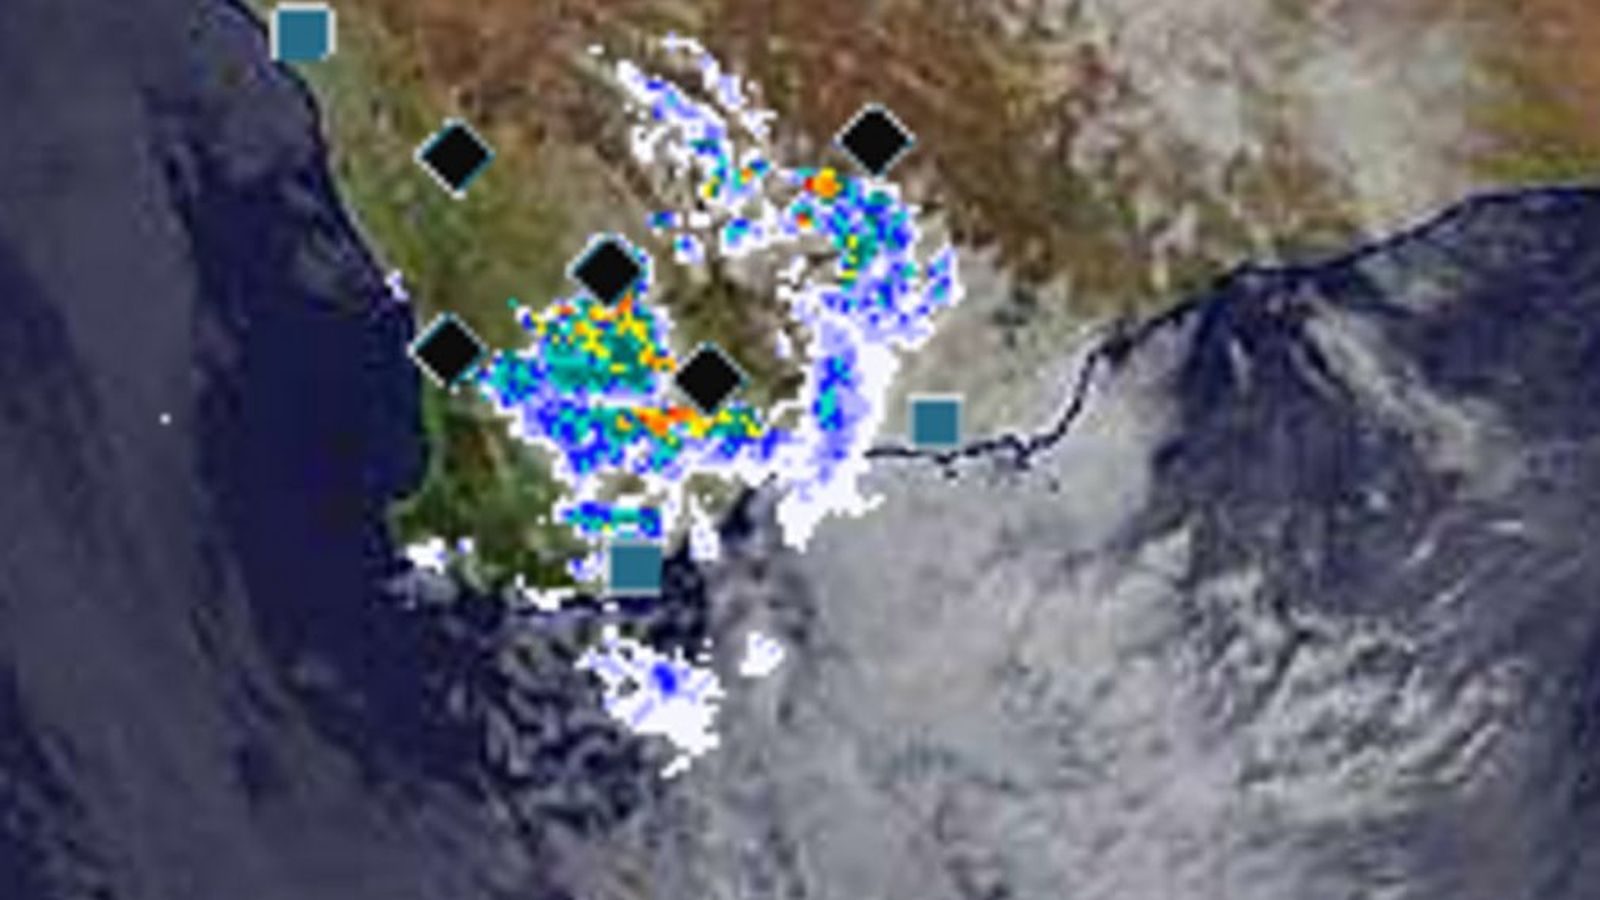 The Bureau of Meteorology radar shows rain over Western Australia.